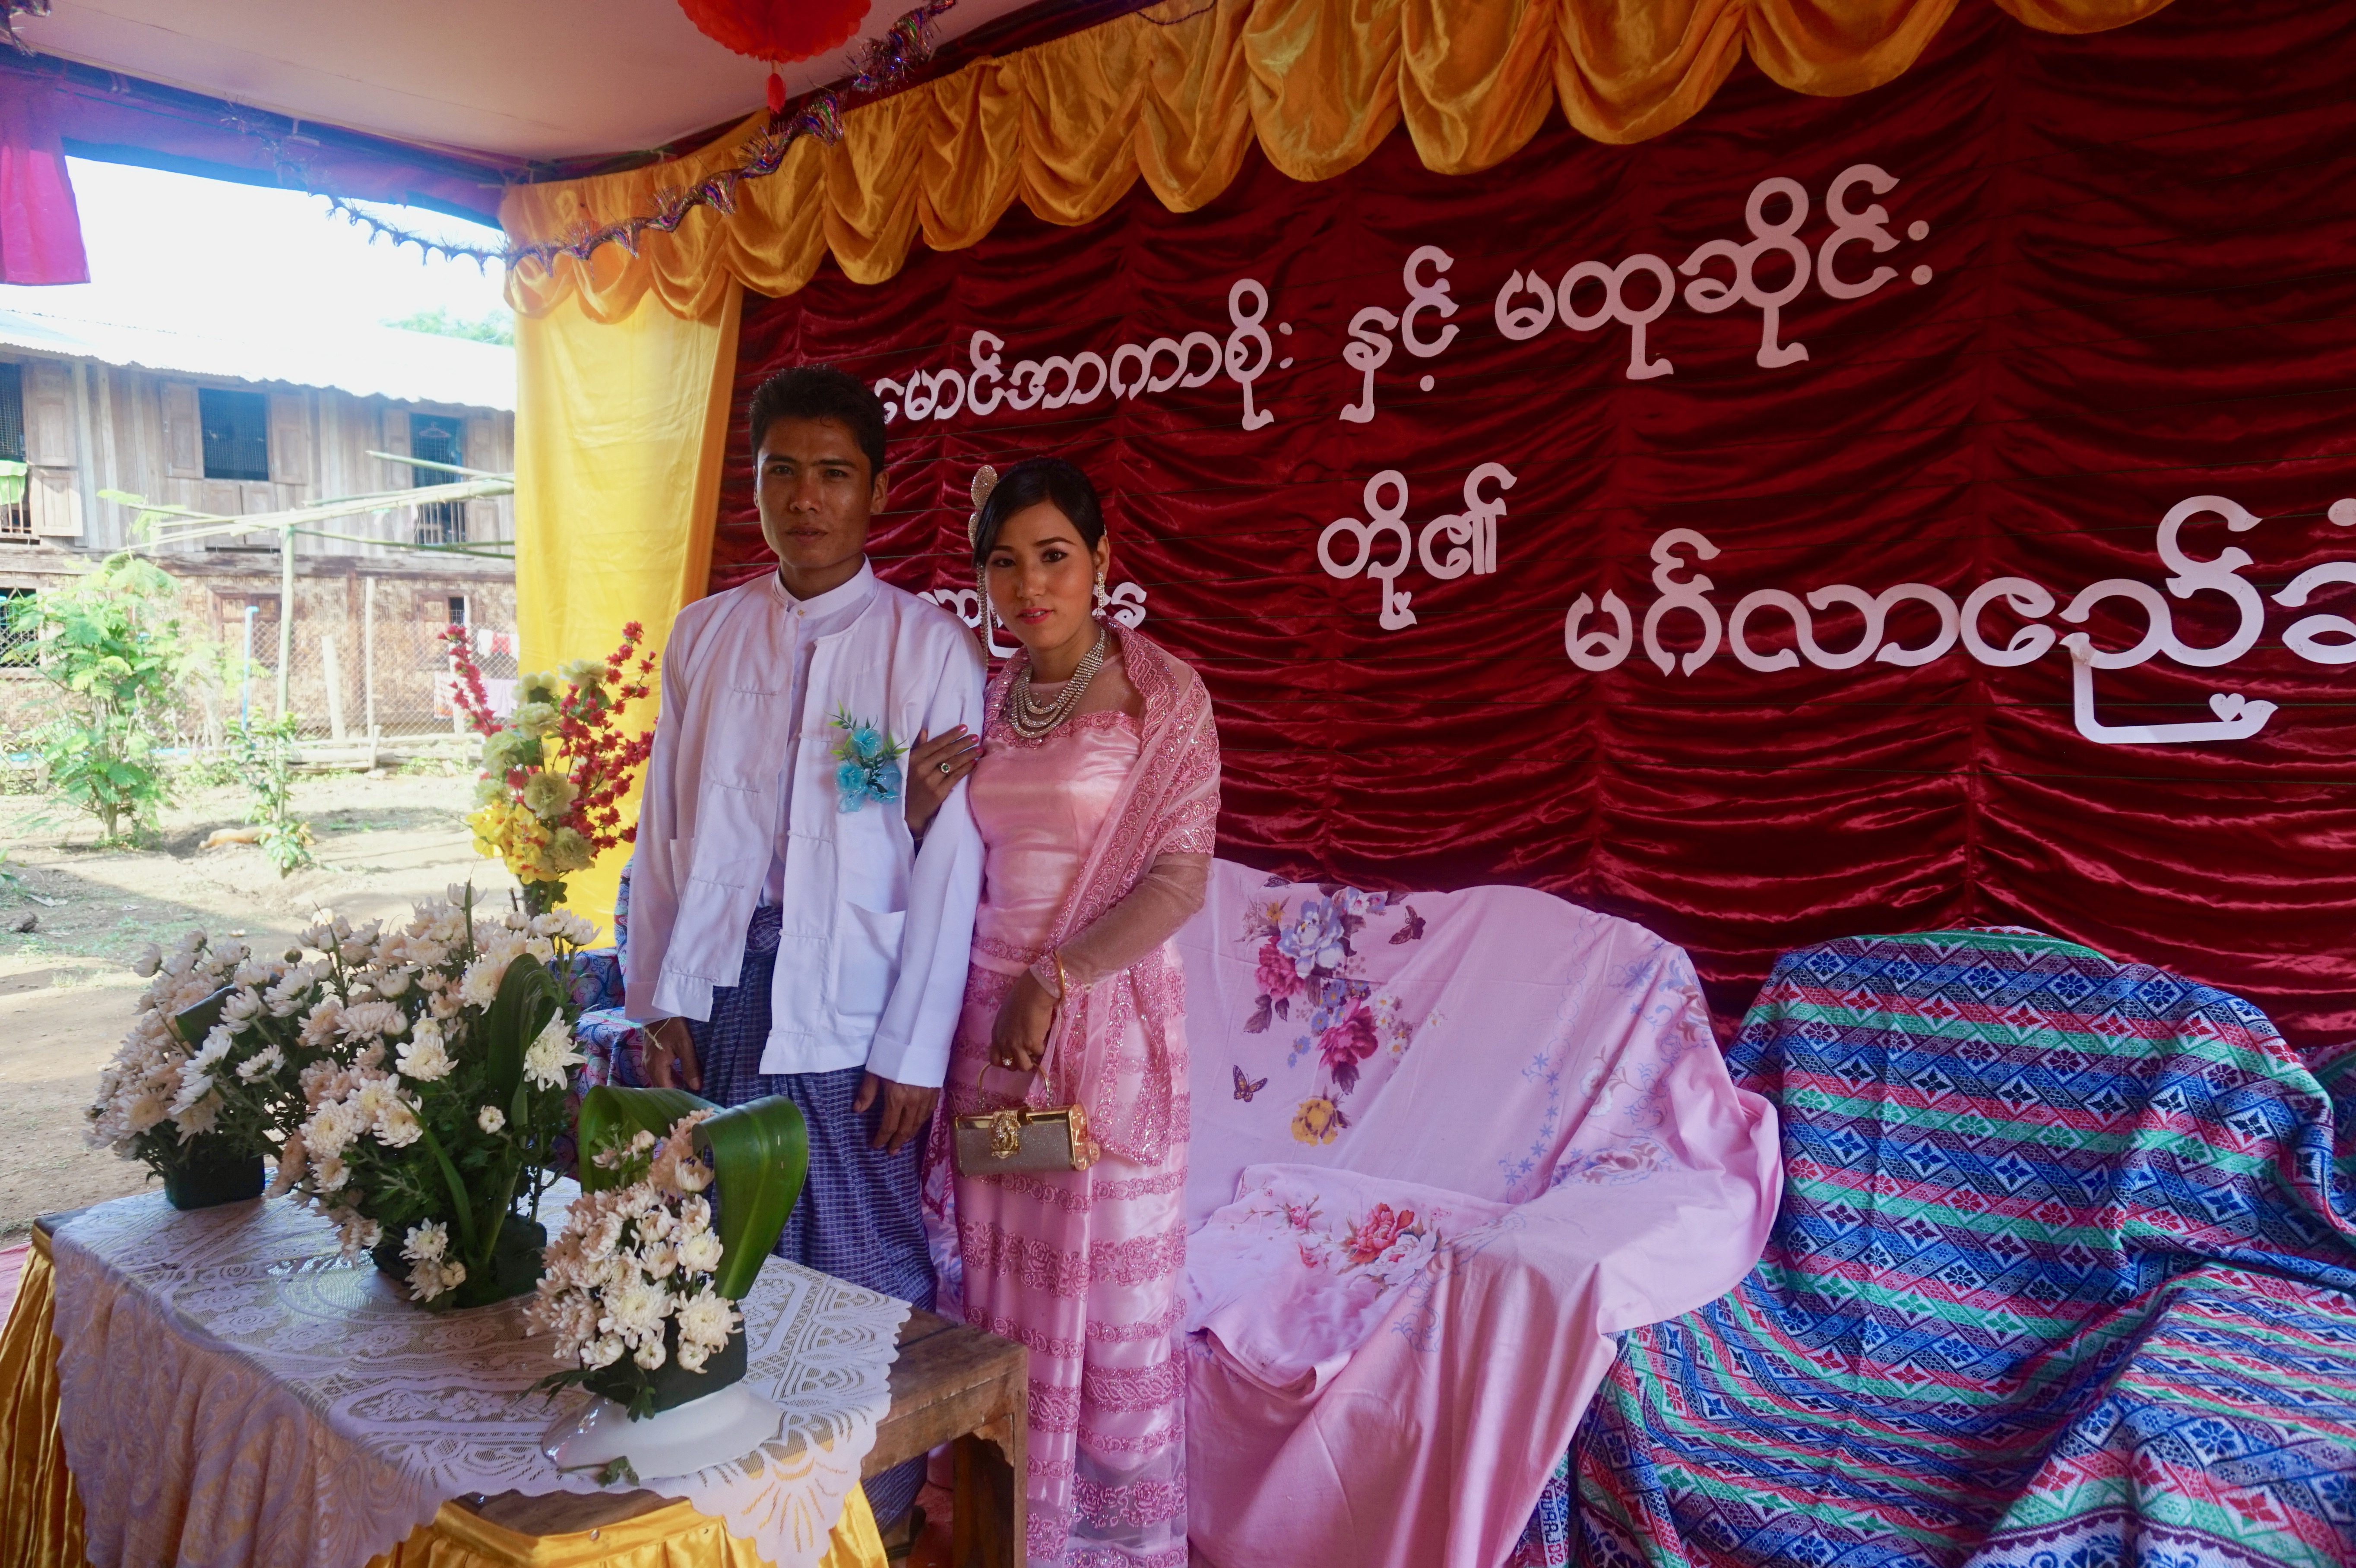 Burmese wedding party